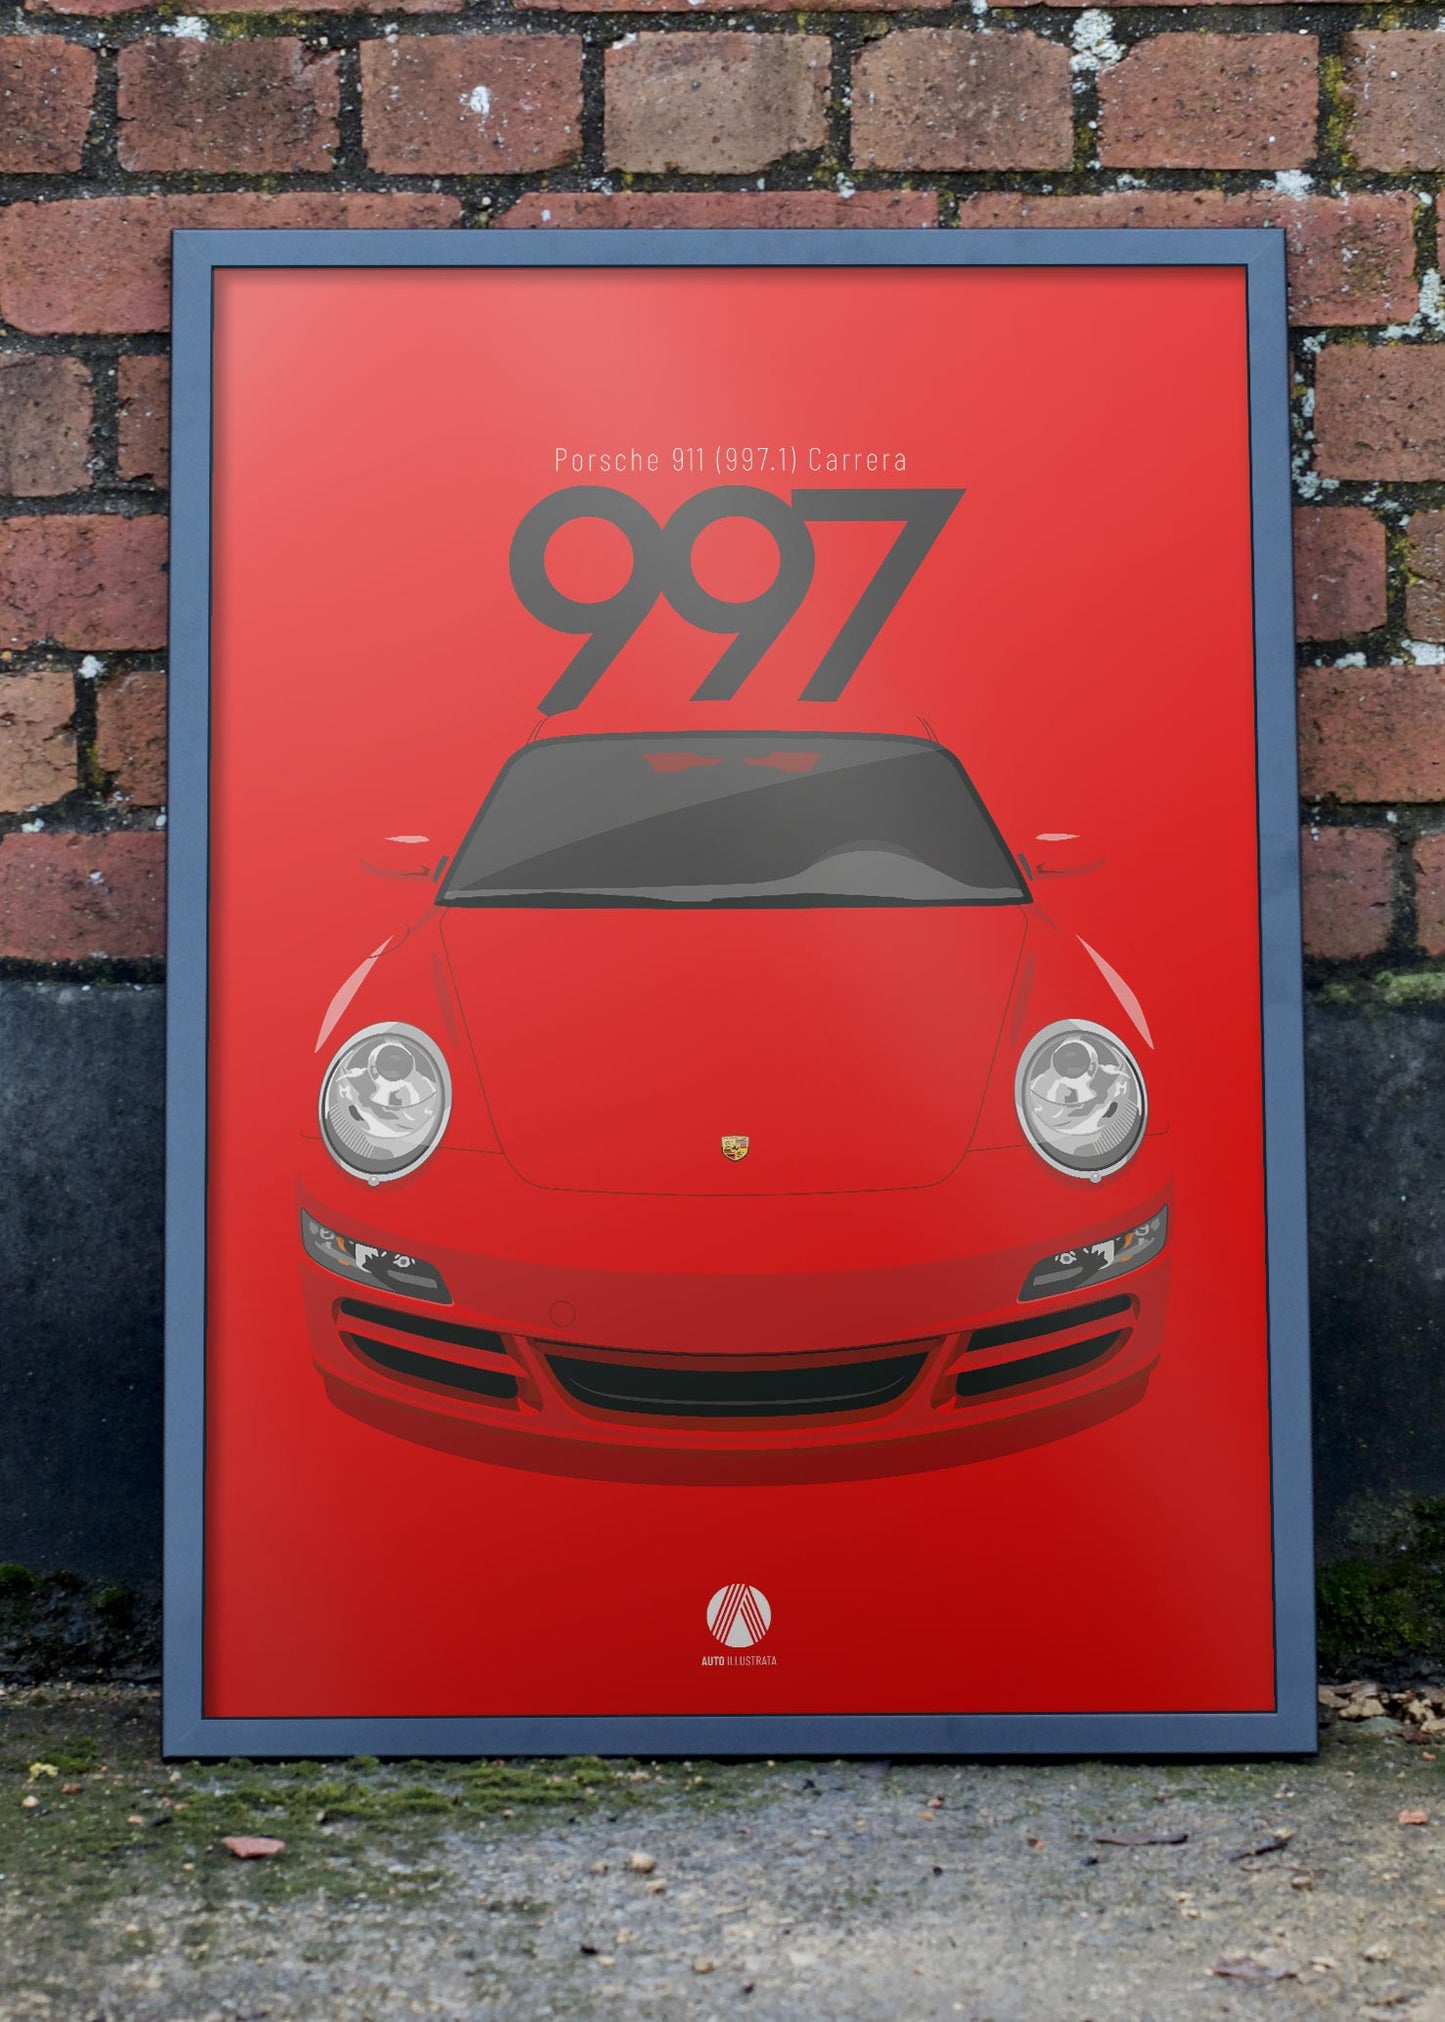 2005 Porsche 911 (997.1) Carrera - Guards Red - poster print